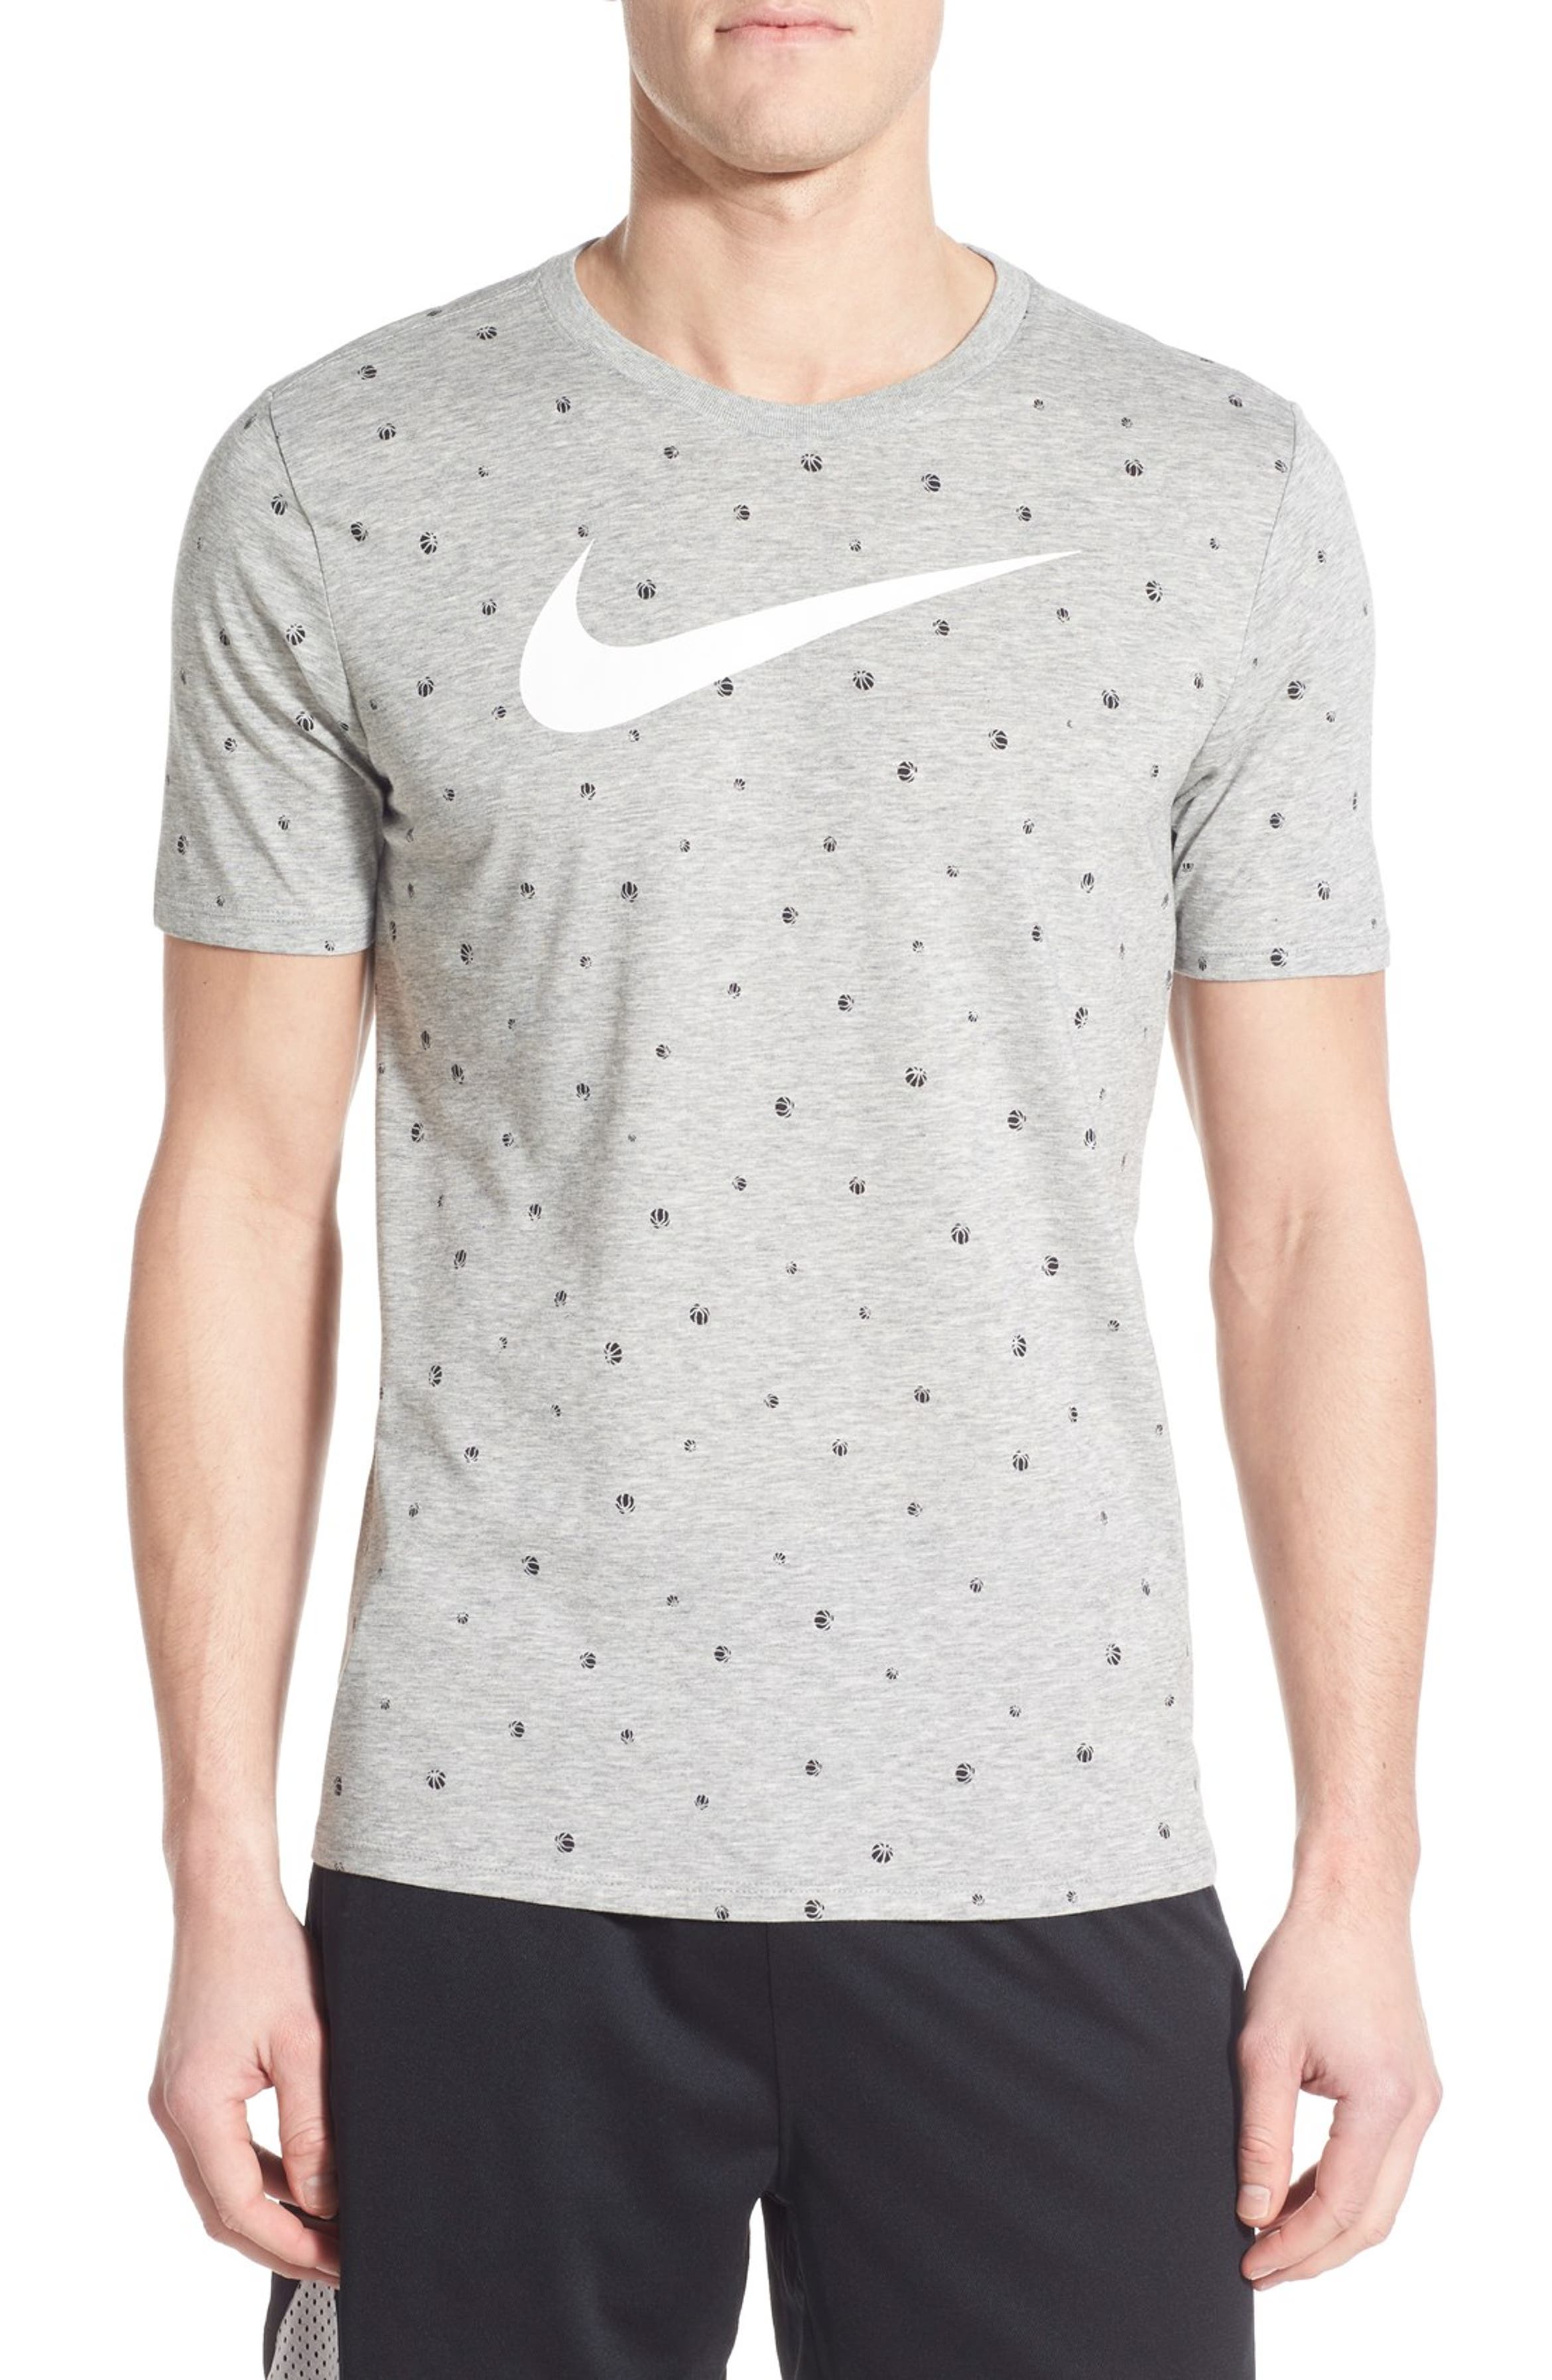 Nike 'Polka Ball Basketball' Dri-FIT Graphic T-Shirt | Nordstrom